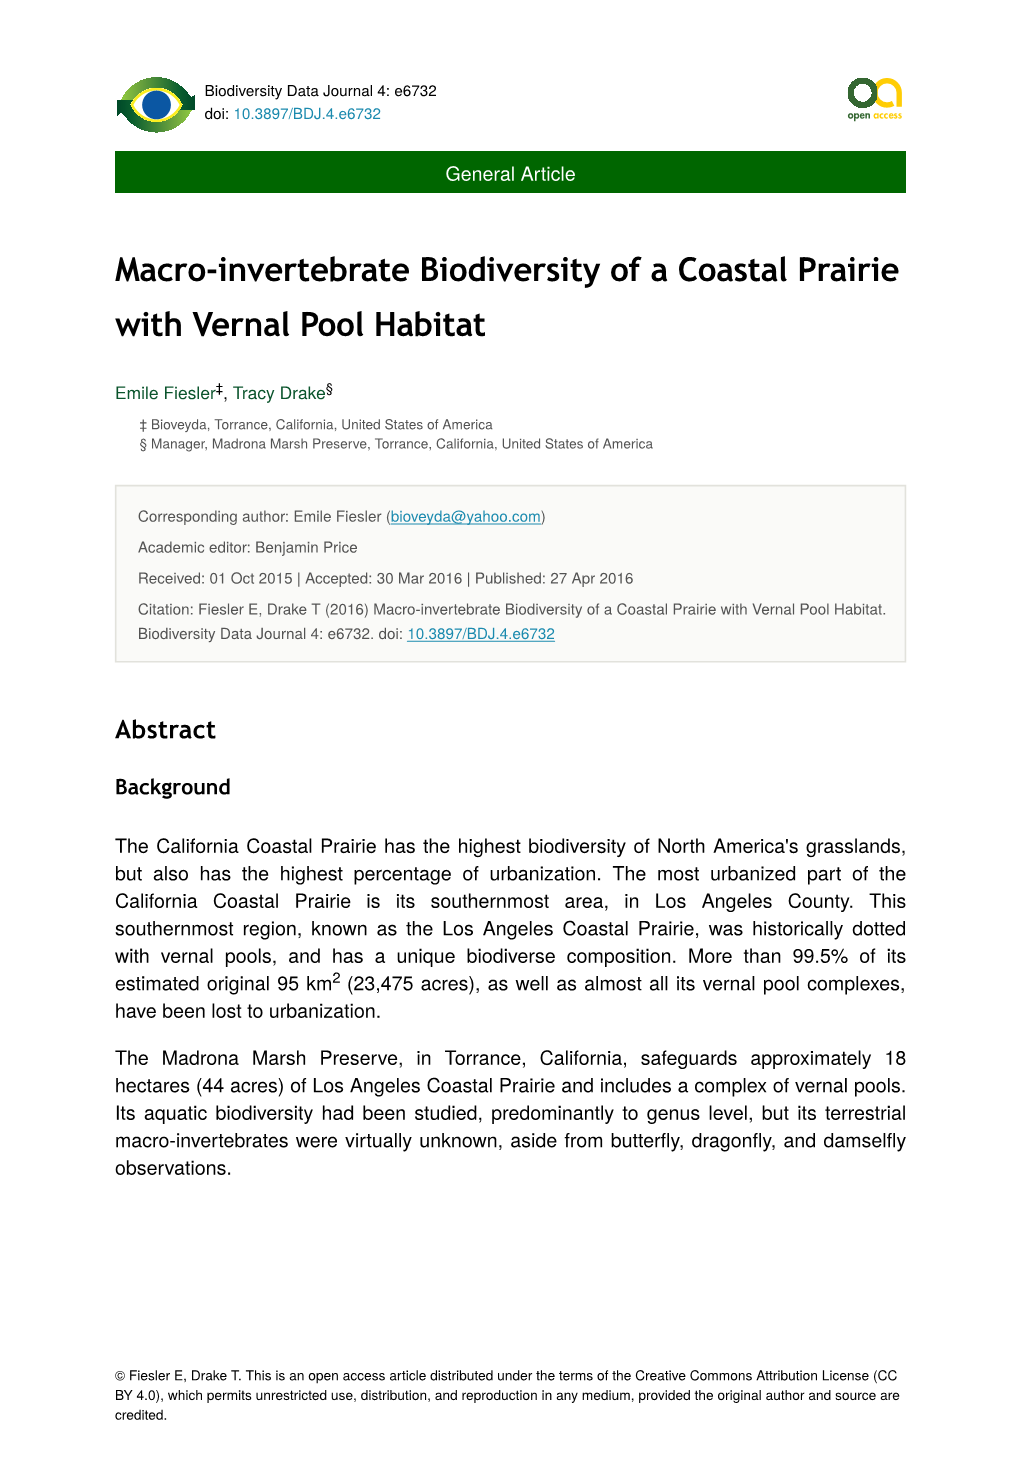 Macro-Invertebrate Biodiversity of a Coastal Prairie with Vernal Pool Habitat